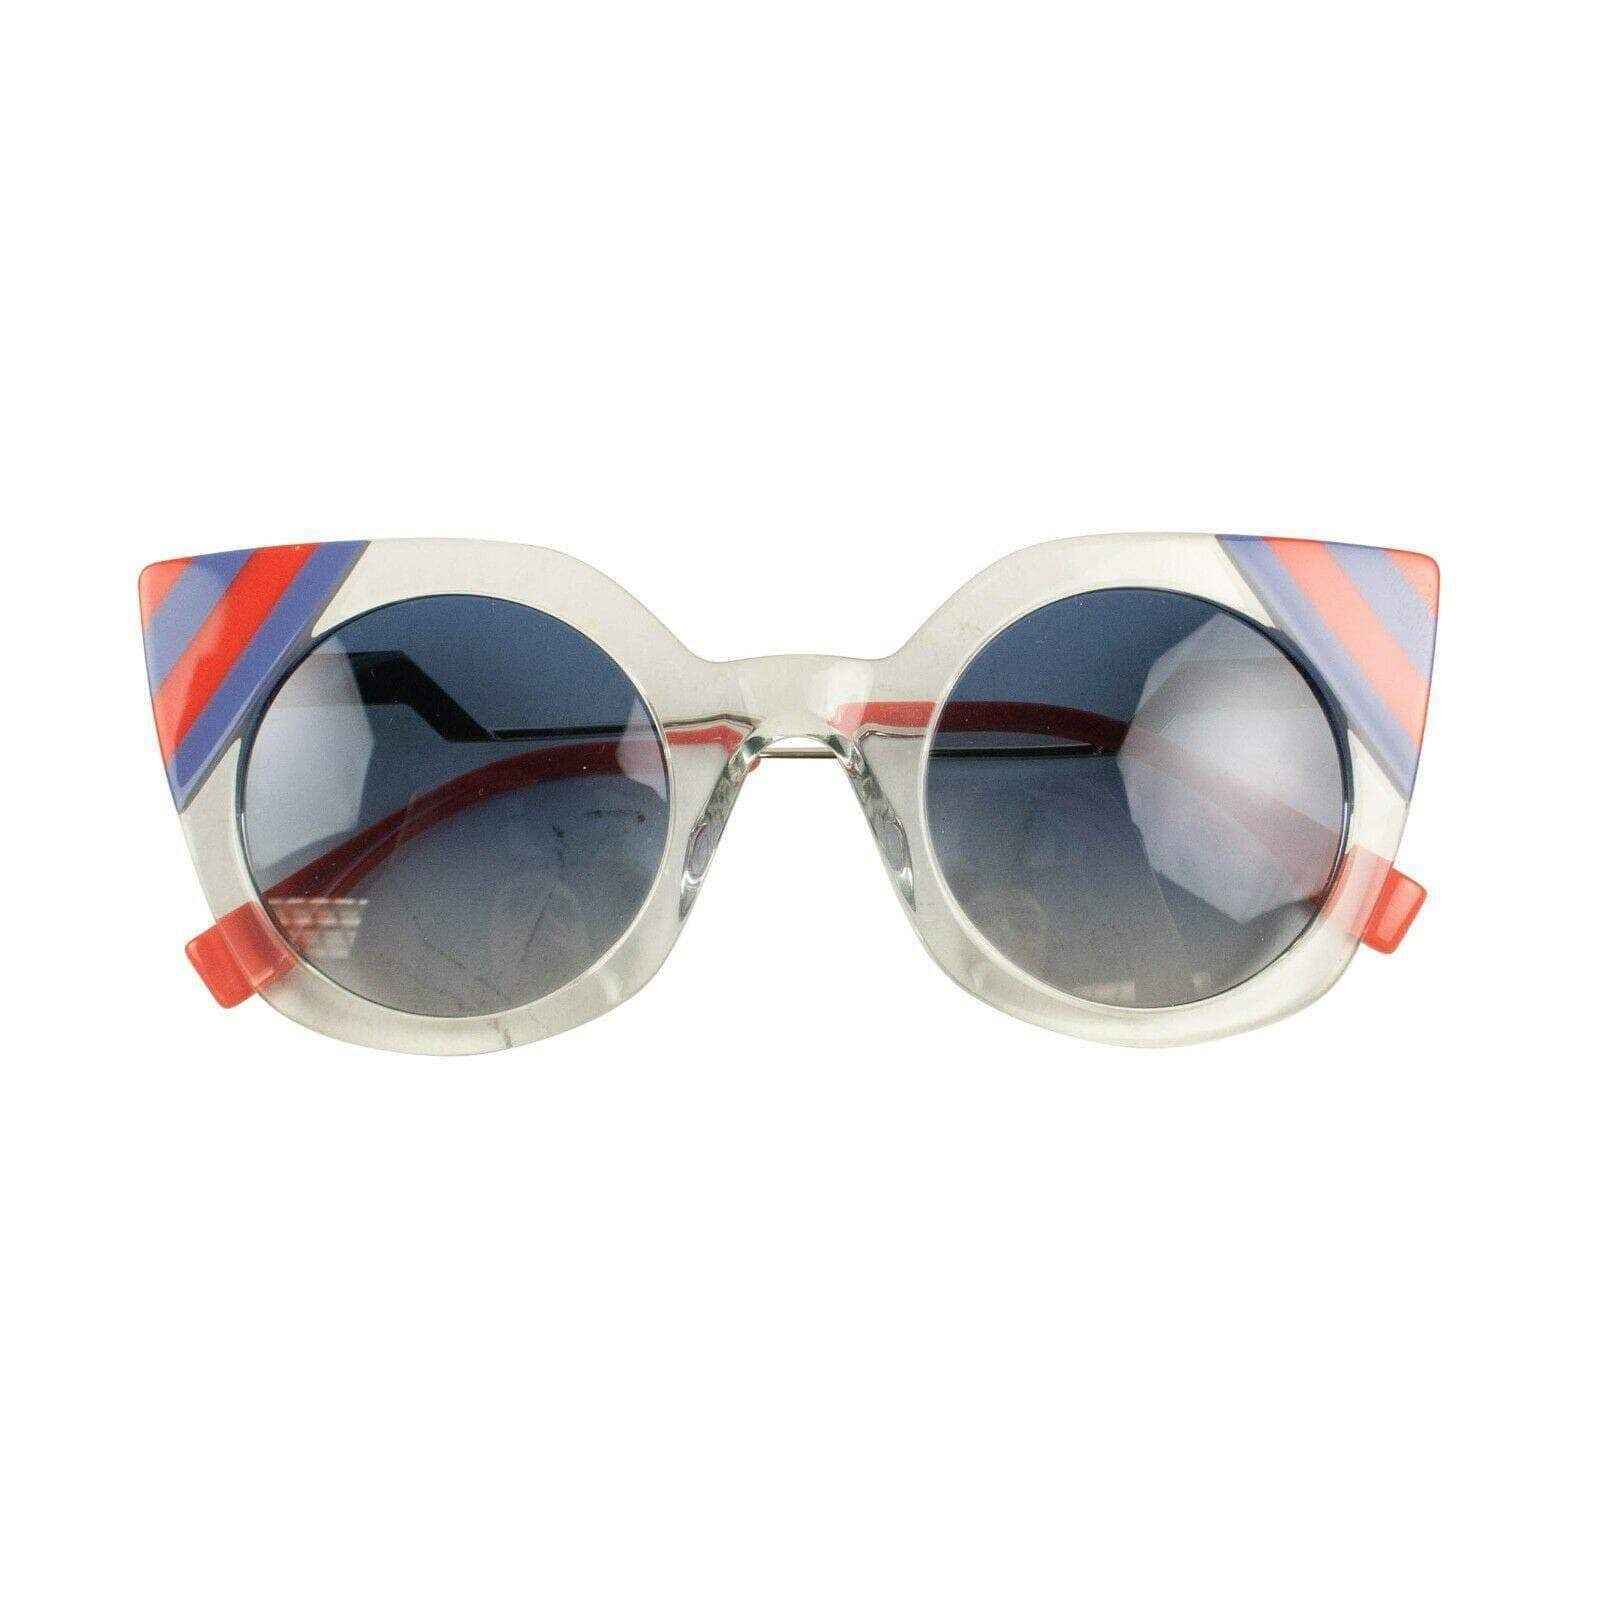 Women's Fendi Plastic Cat Eye Sunglasses - Blue / Red / Clear